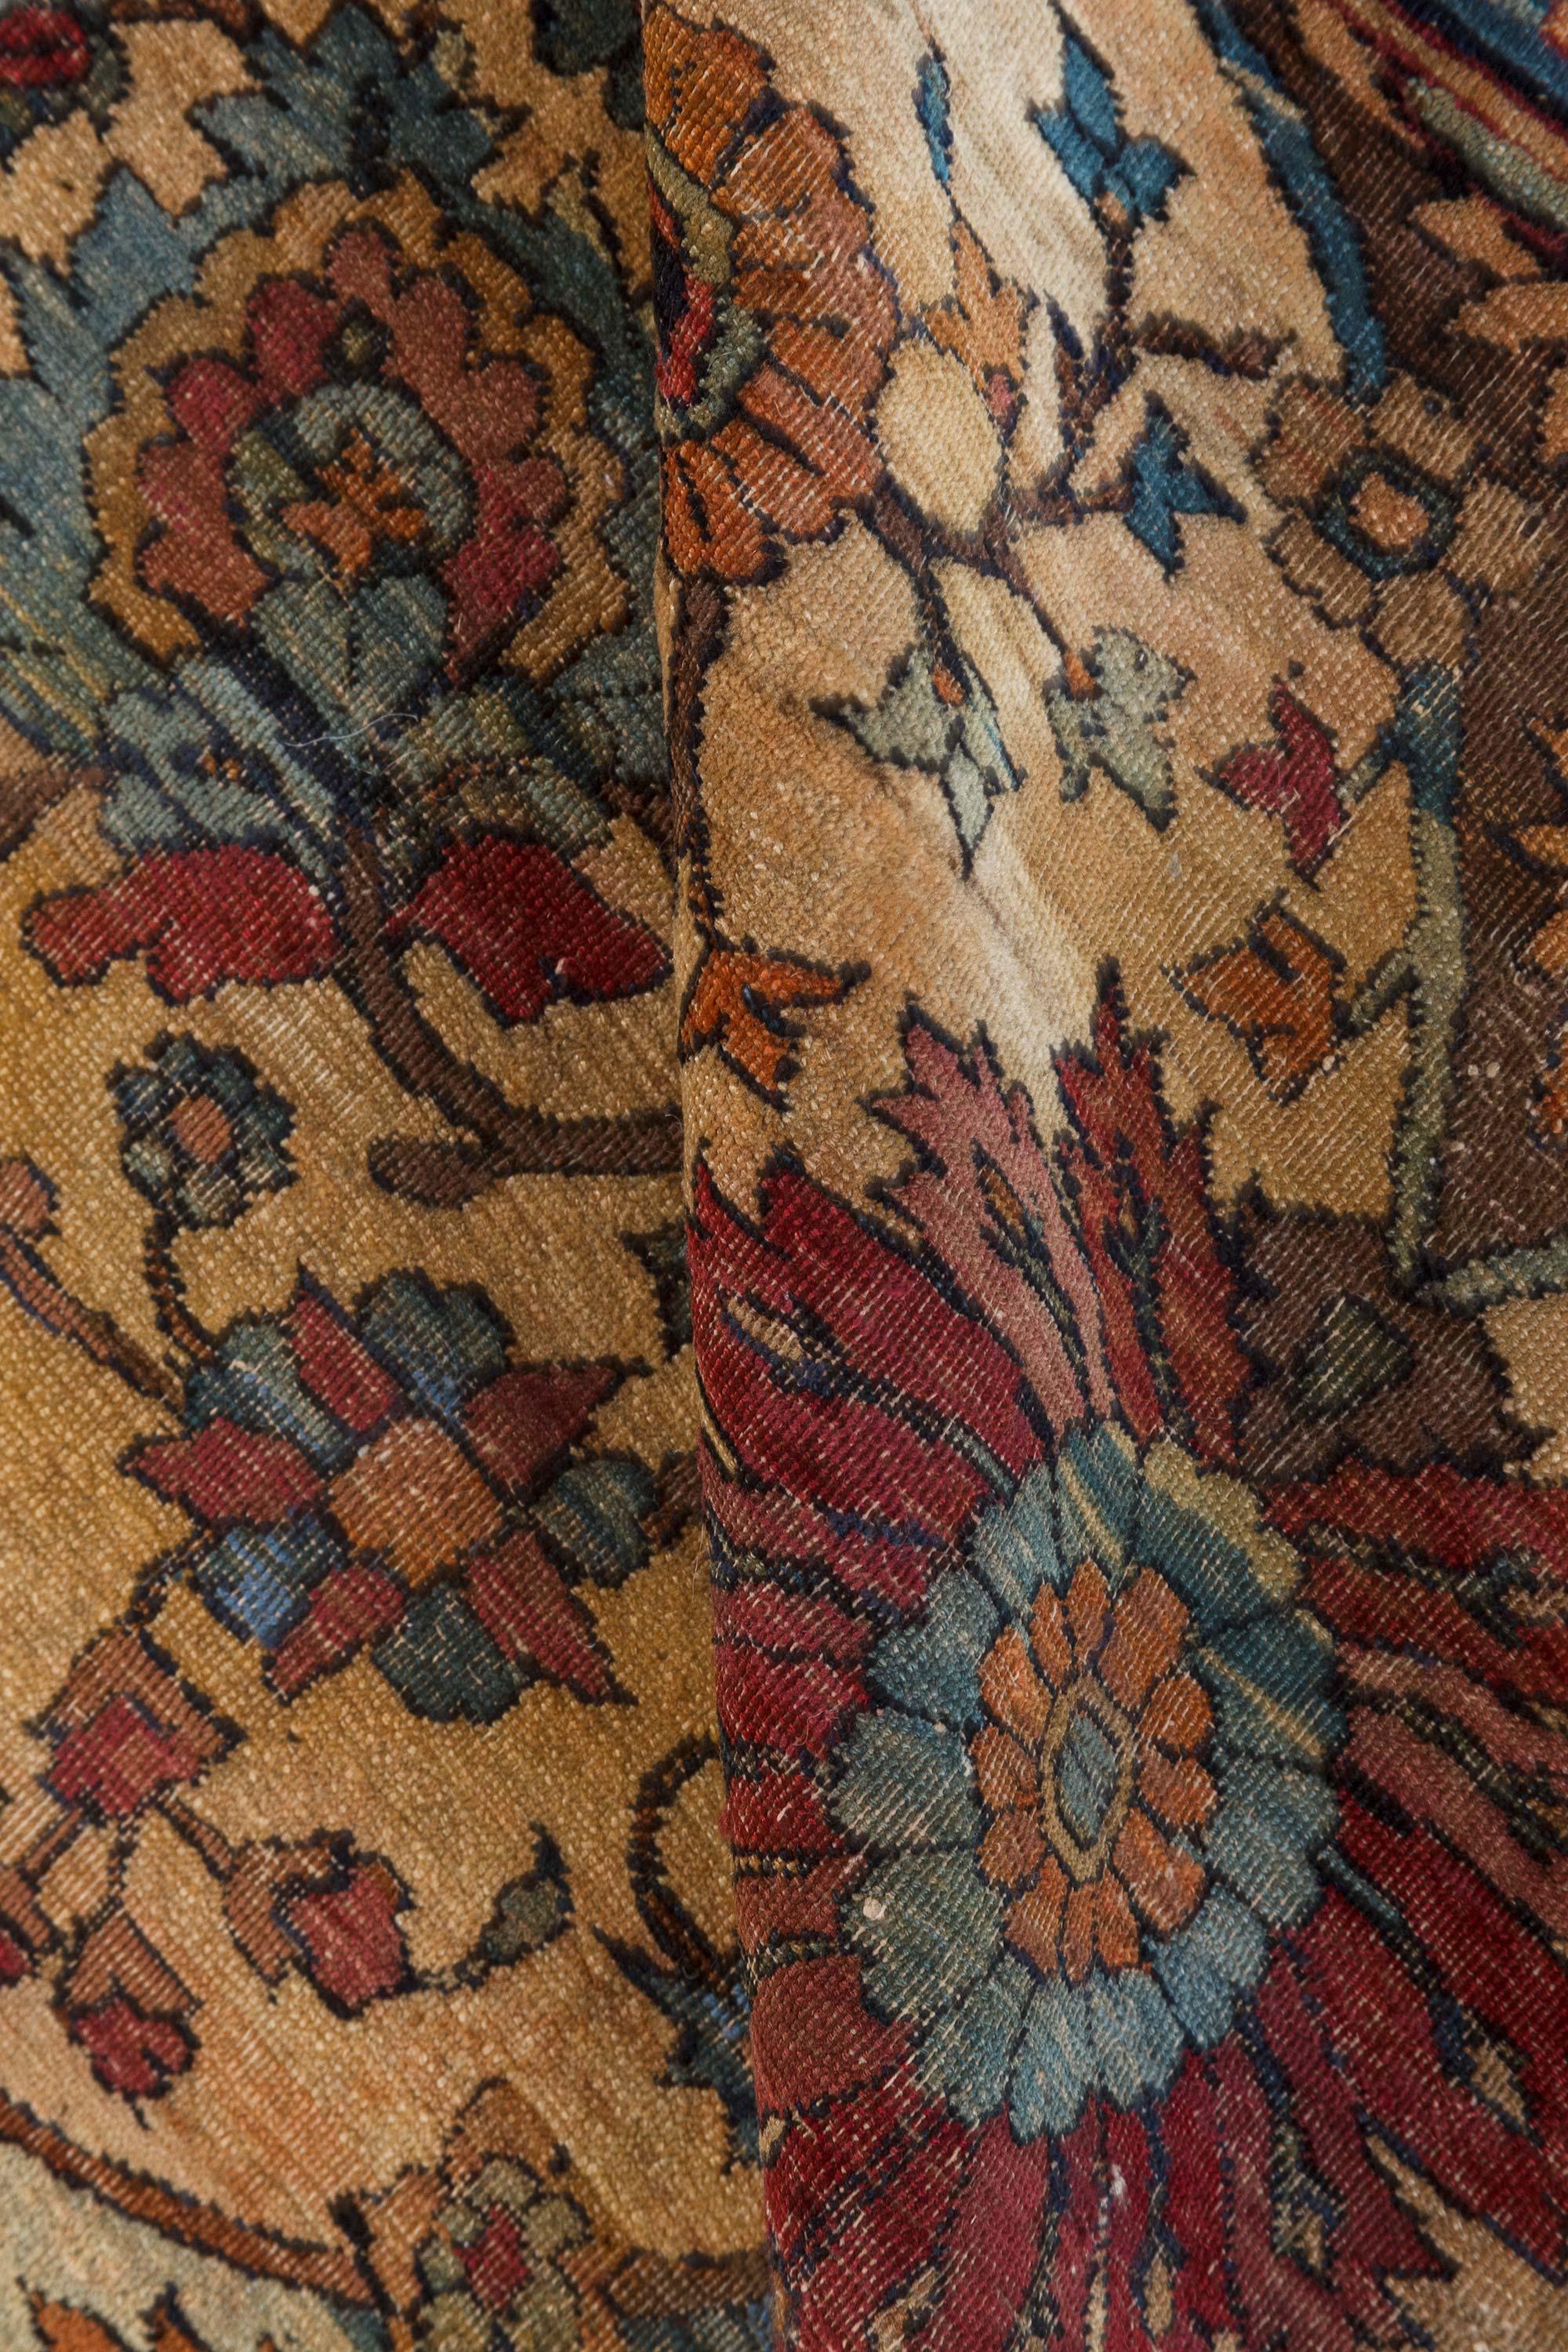 Extra large Early 20th Century Persian Kirman botanic handmade wool rug
Size: 16'4